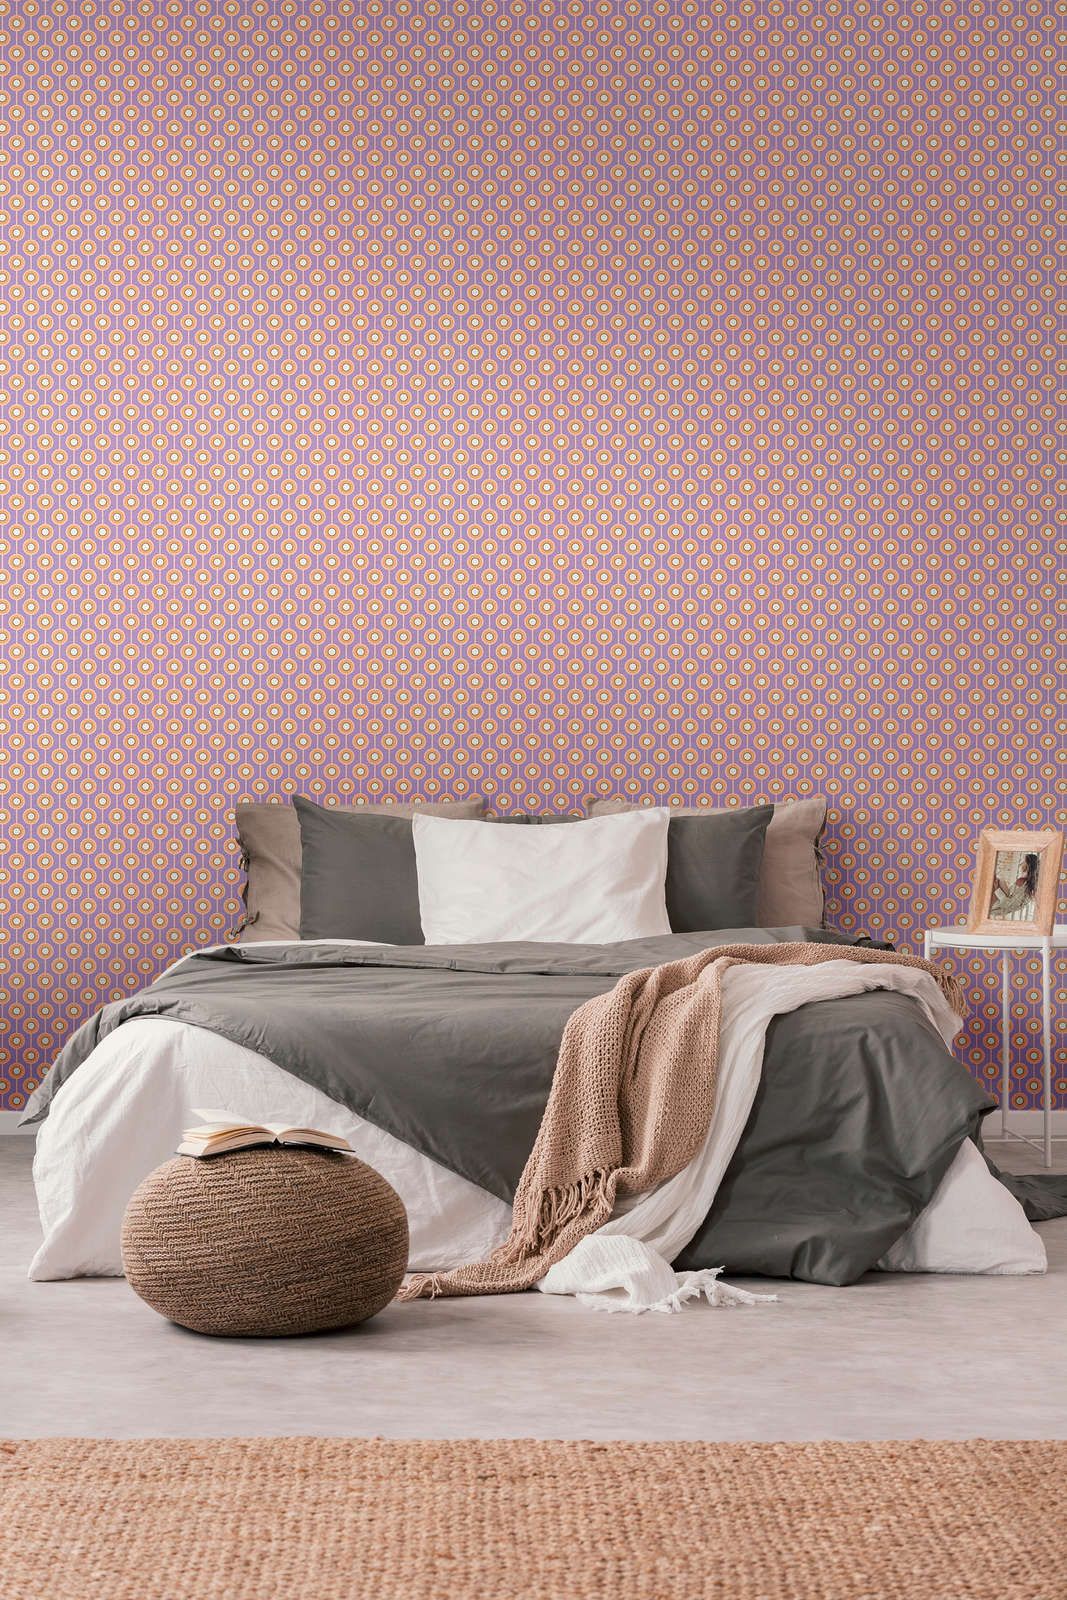             Abstract circle pattern on non-woven wallpaper in retro style - purple, orange, beige
        